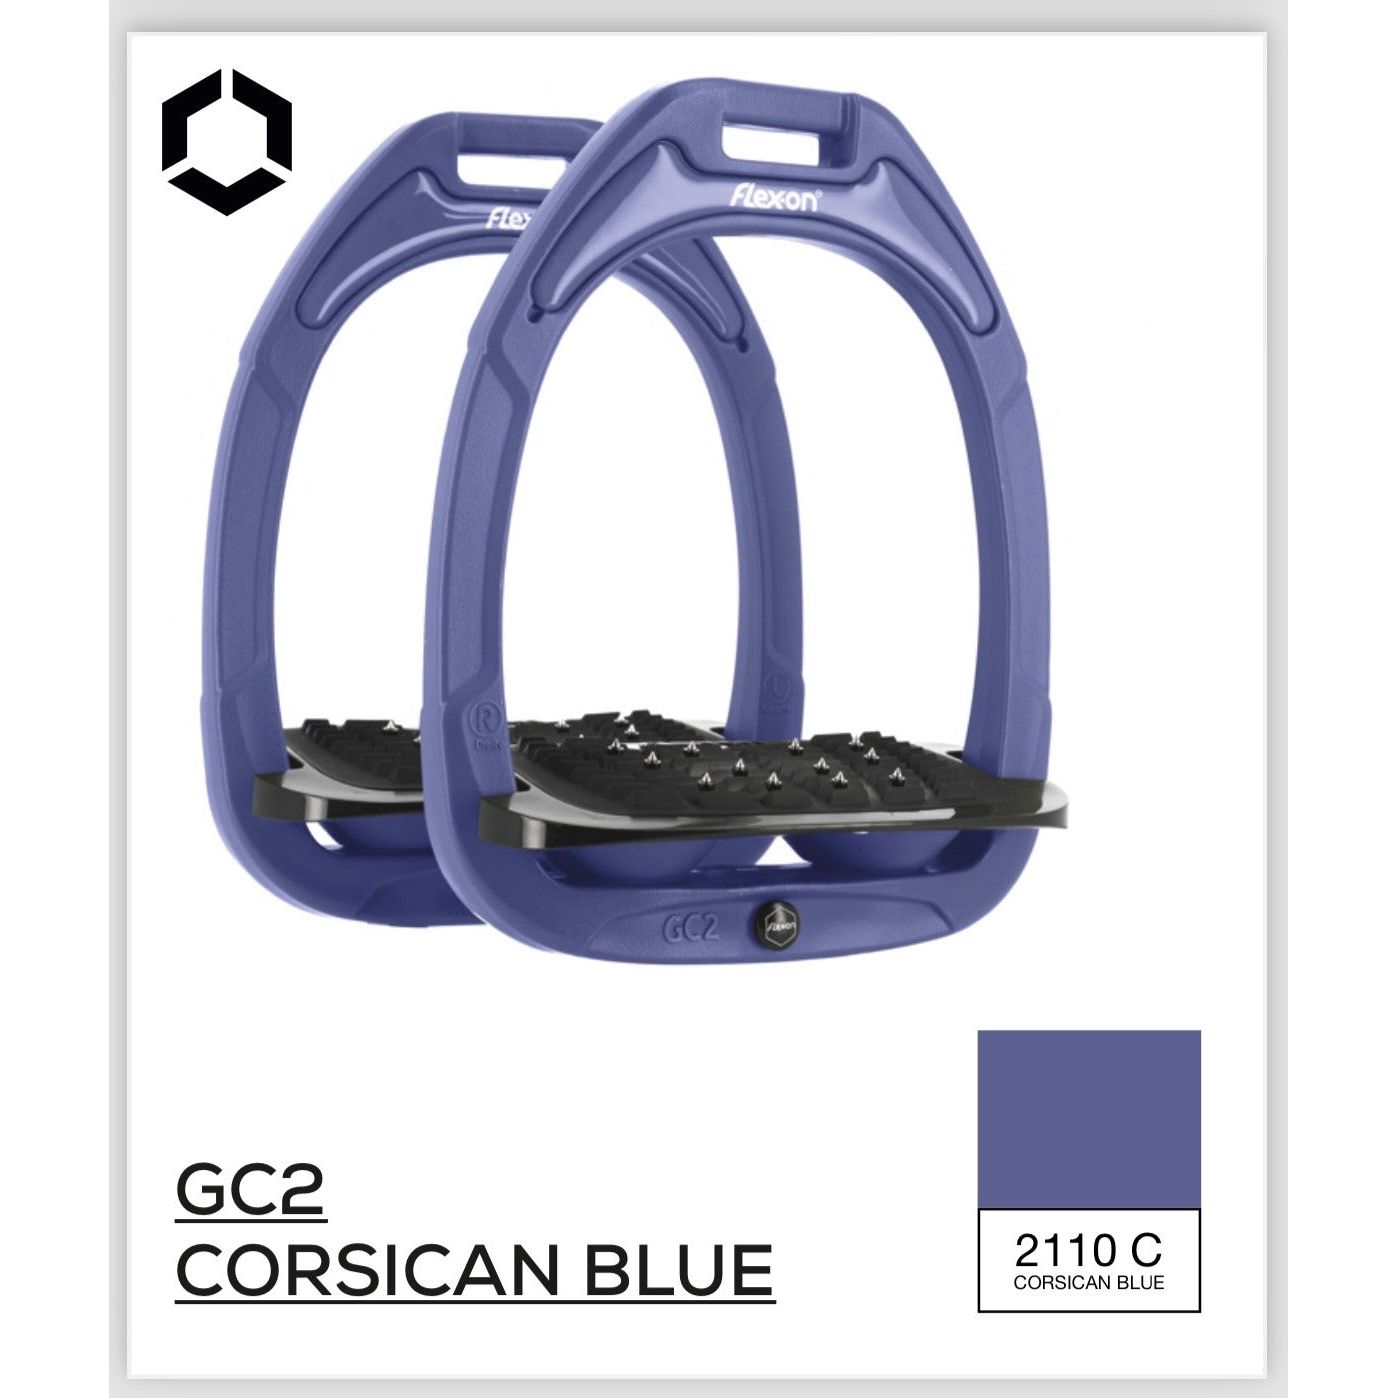 Flex-On Green Composite Stirrups - Limited Edition 'Corsican Blue'